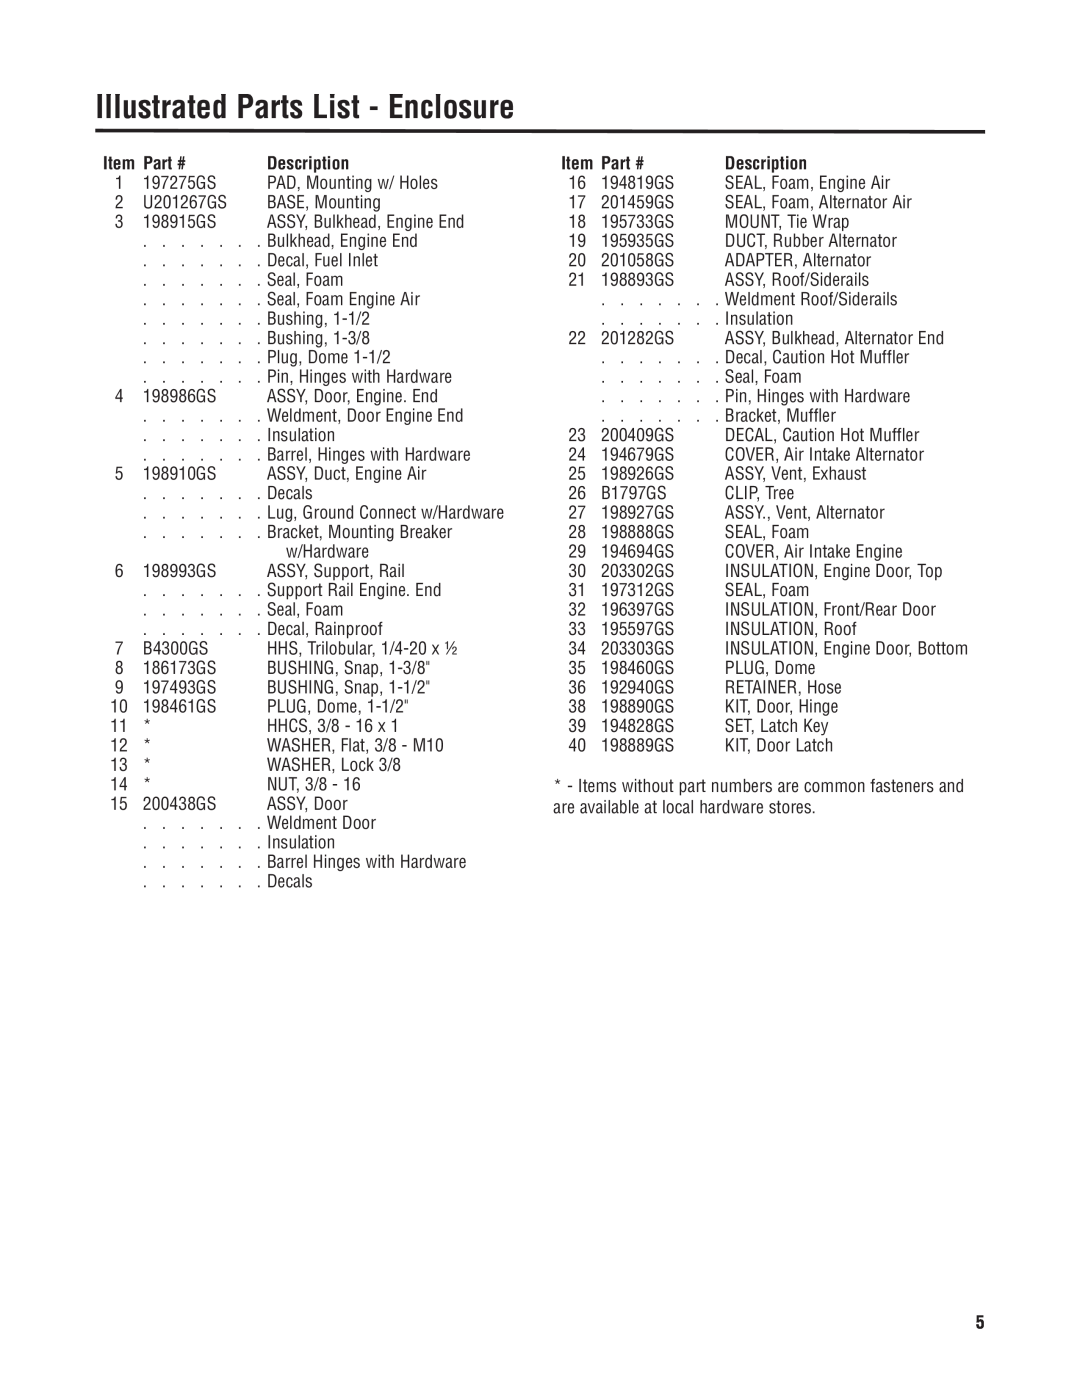 Briggs & Stratton 040210-1 manual Illustrated Parts List - Enclosure, Description 